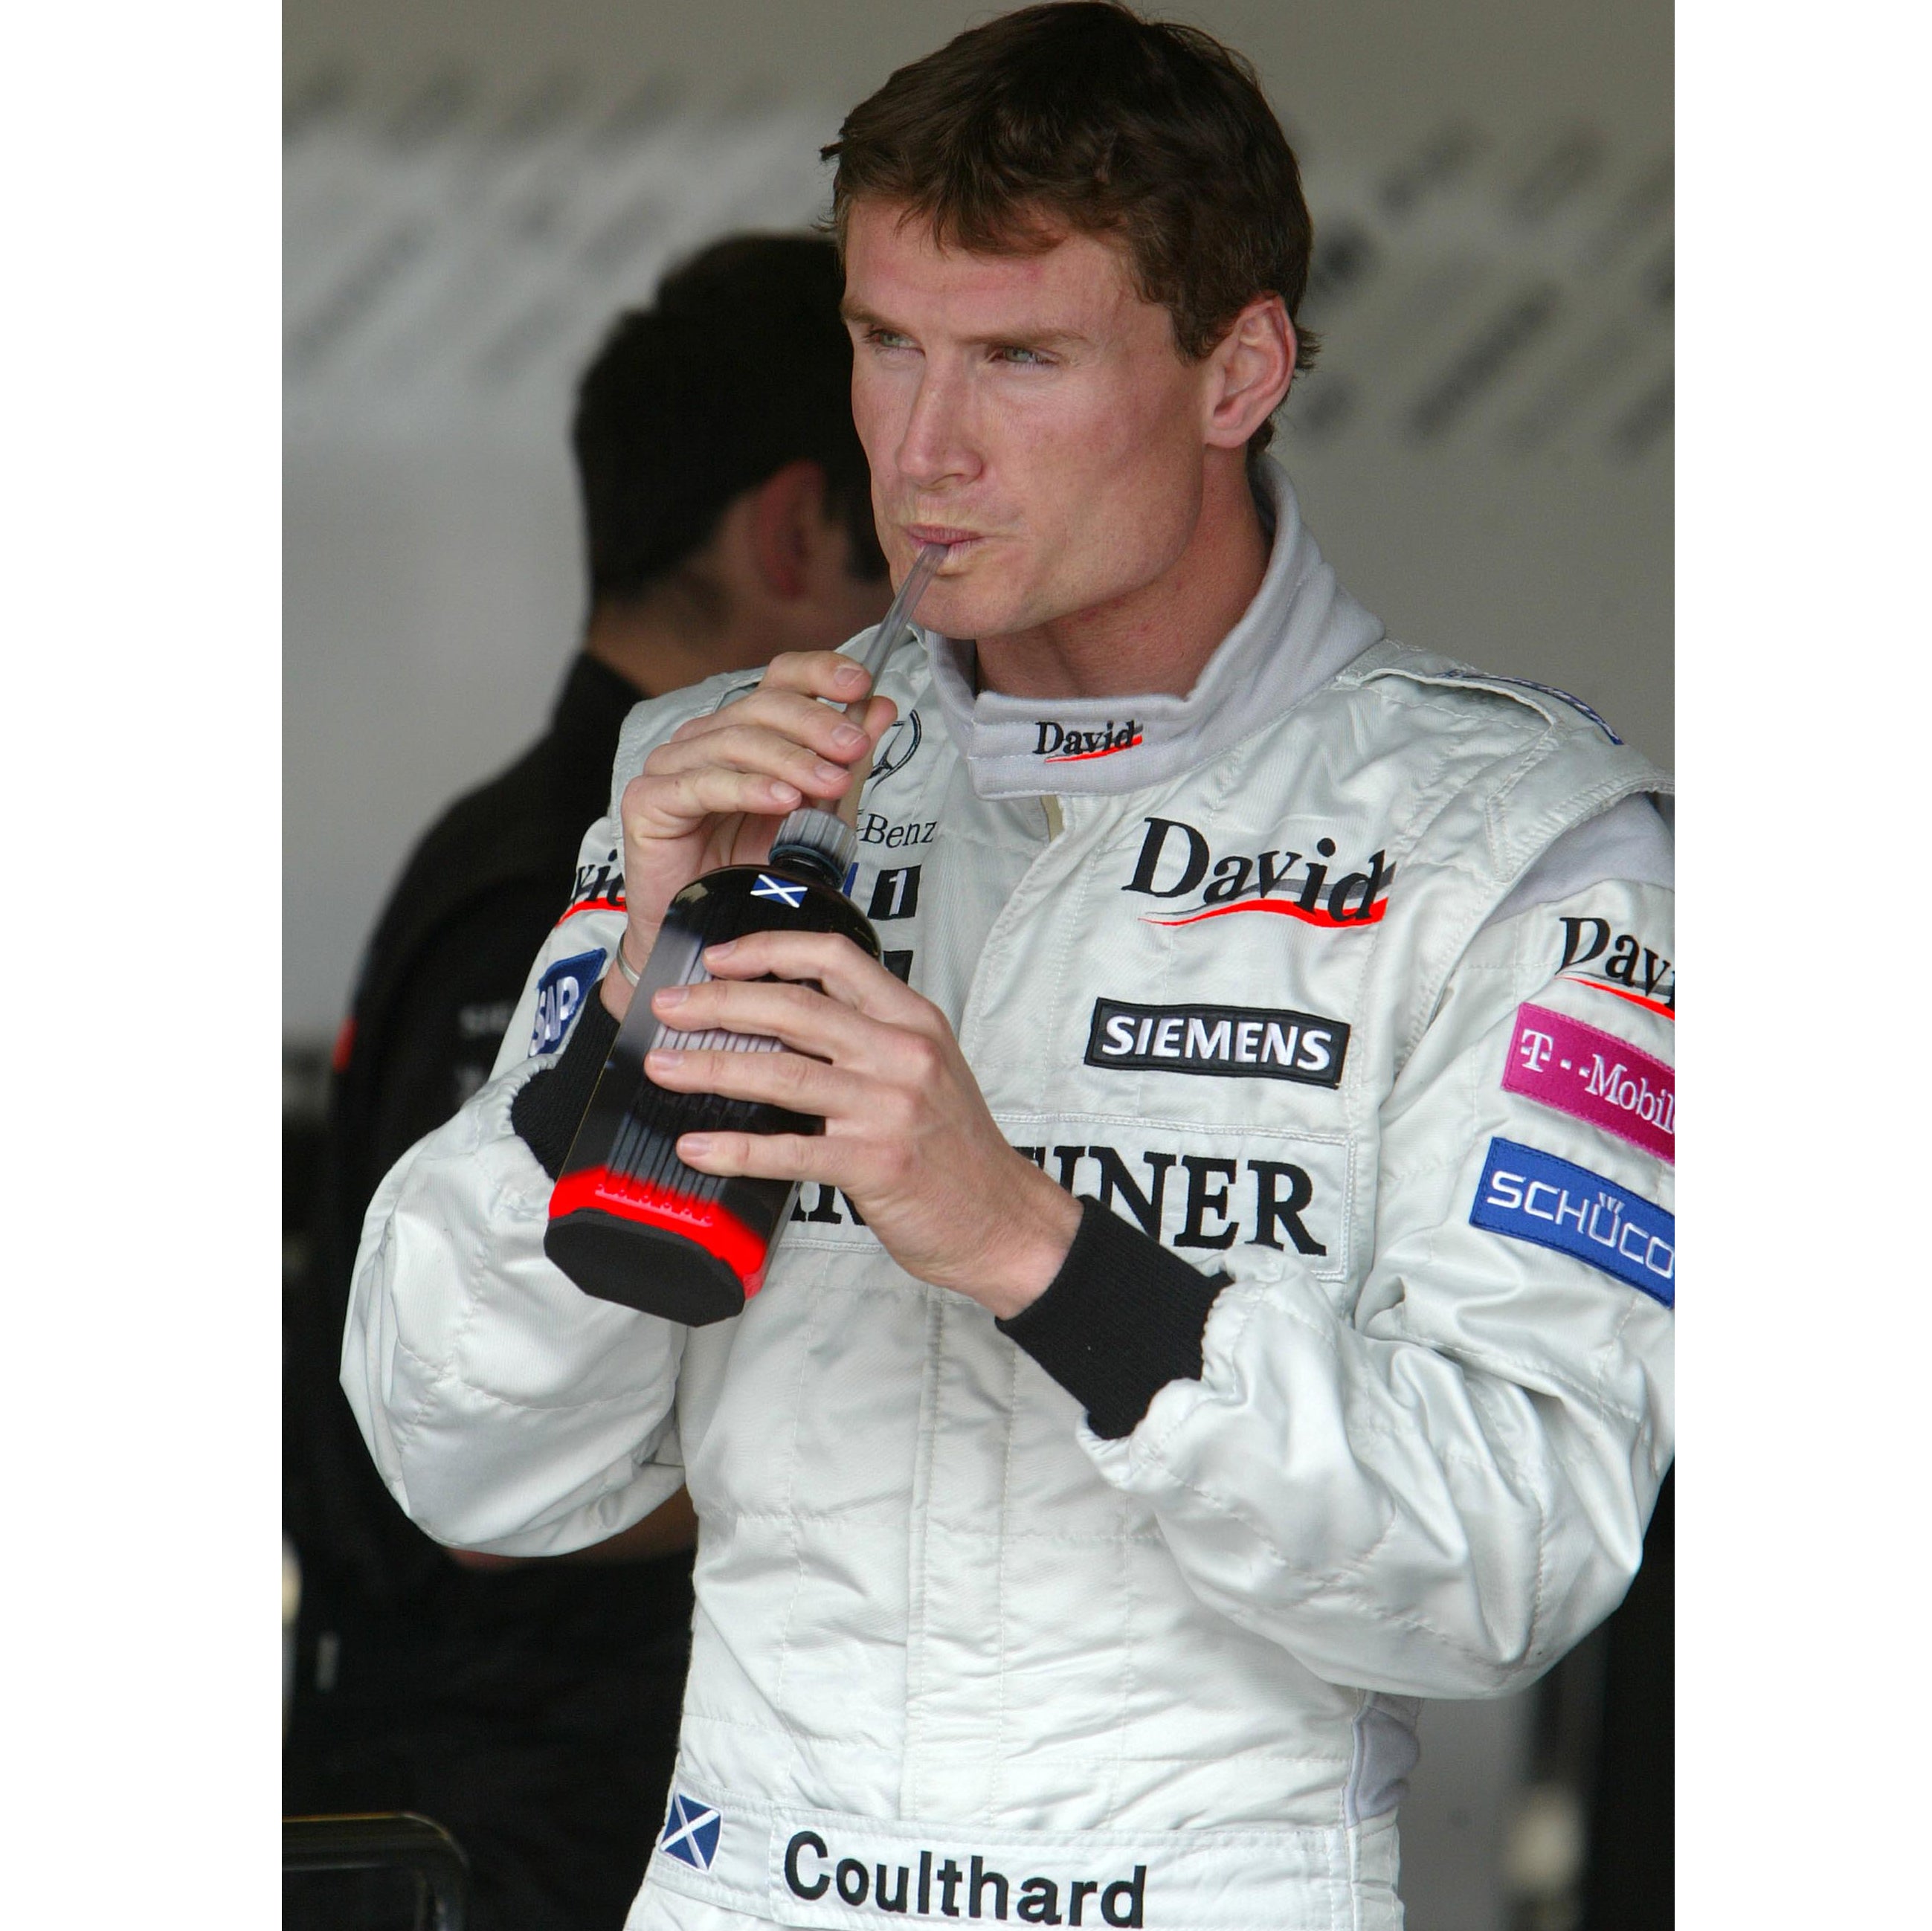 David Coulthard 2004  Replica McLaren F1 Team Race Suit